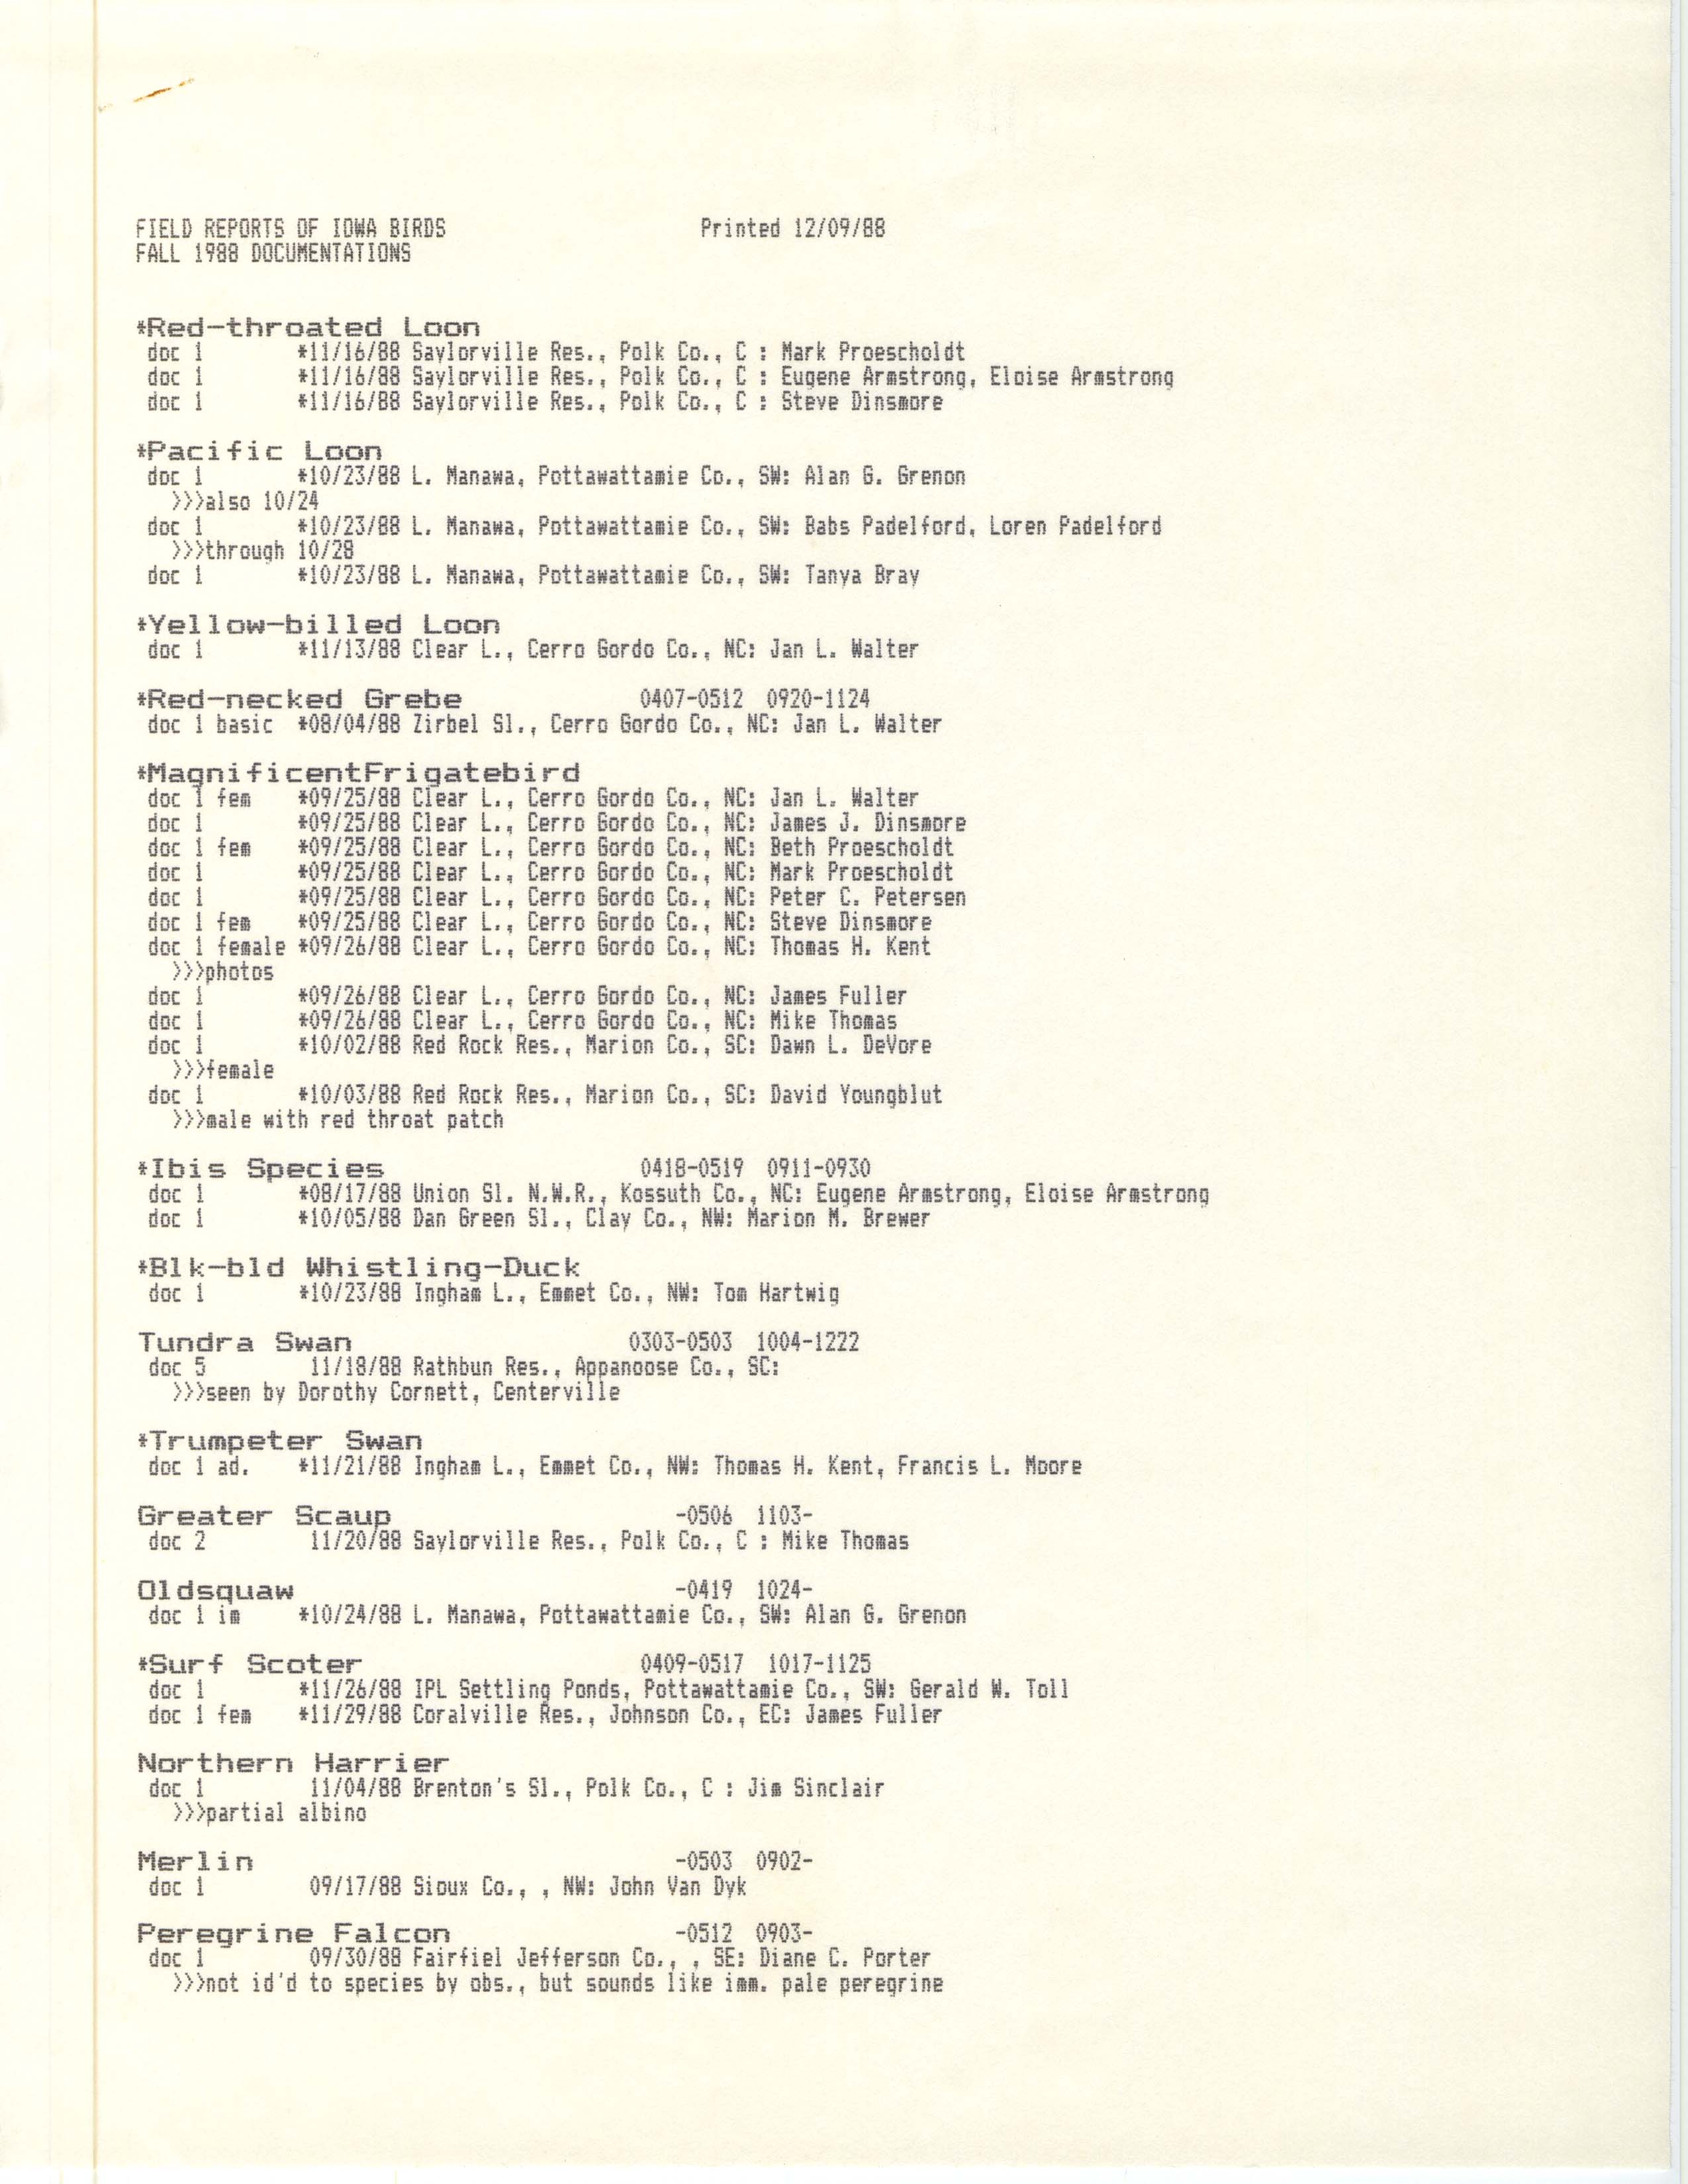 Field reports of Iowa birds, fall 1988 documentations, December 9, 1988